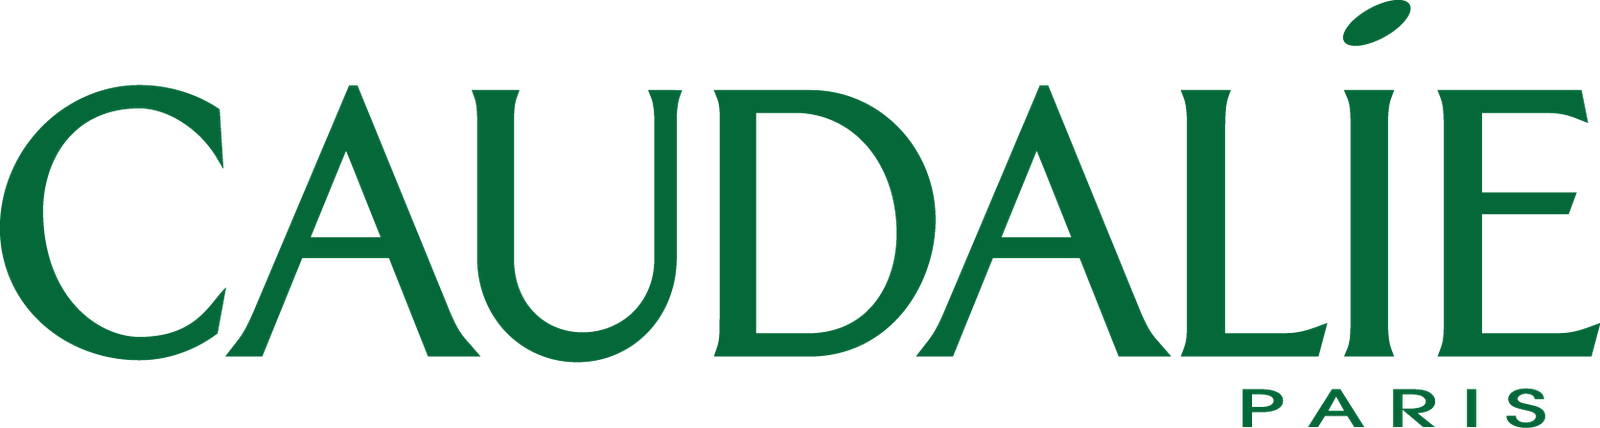 Caudalie Logo